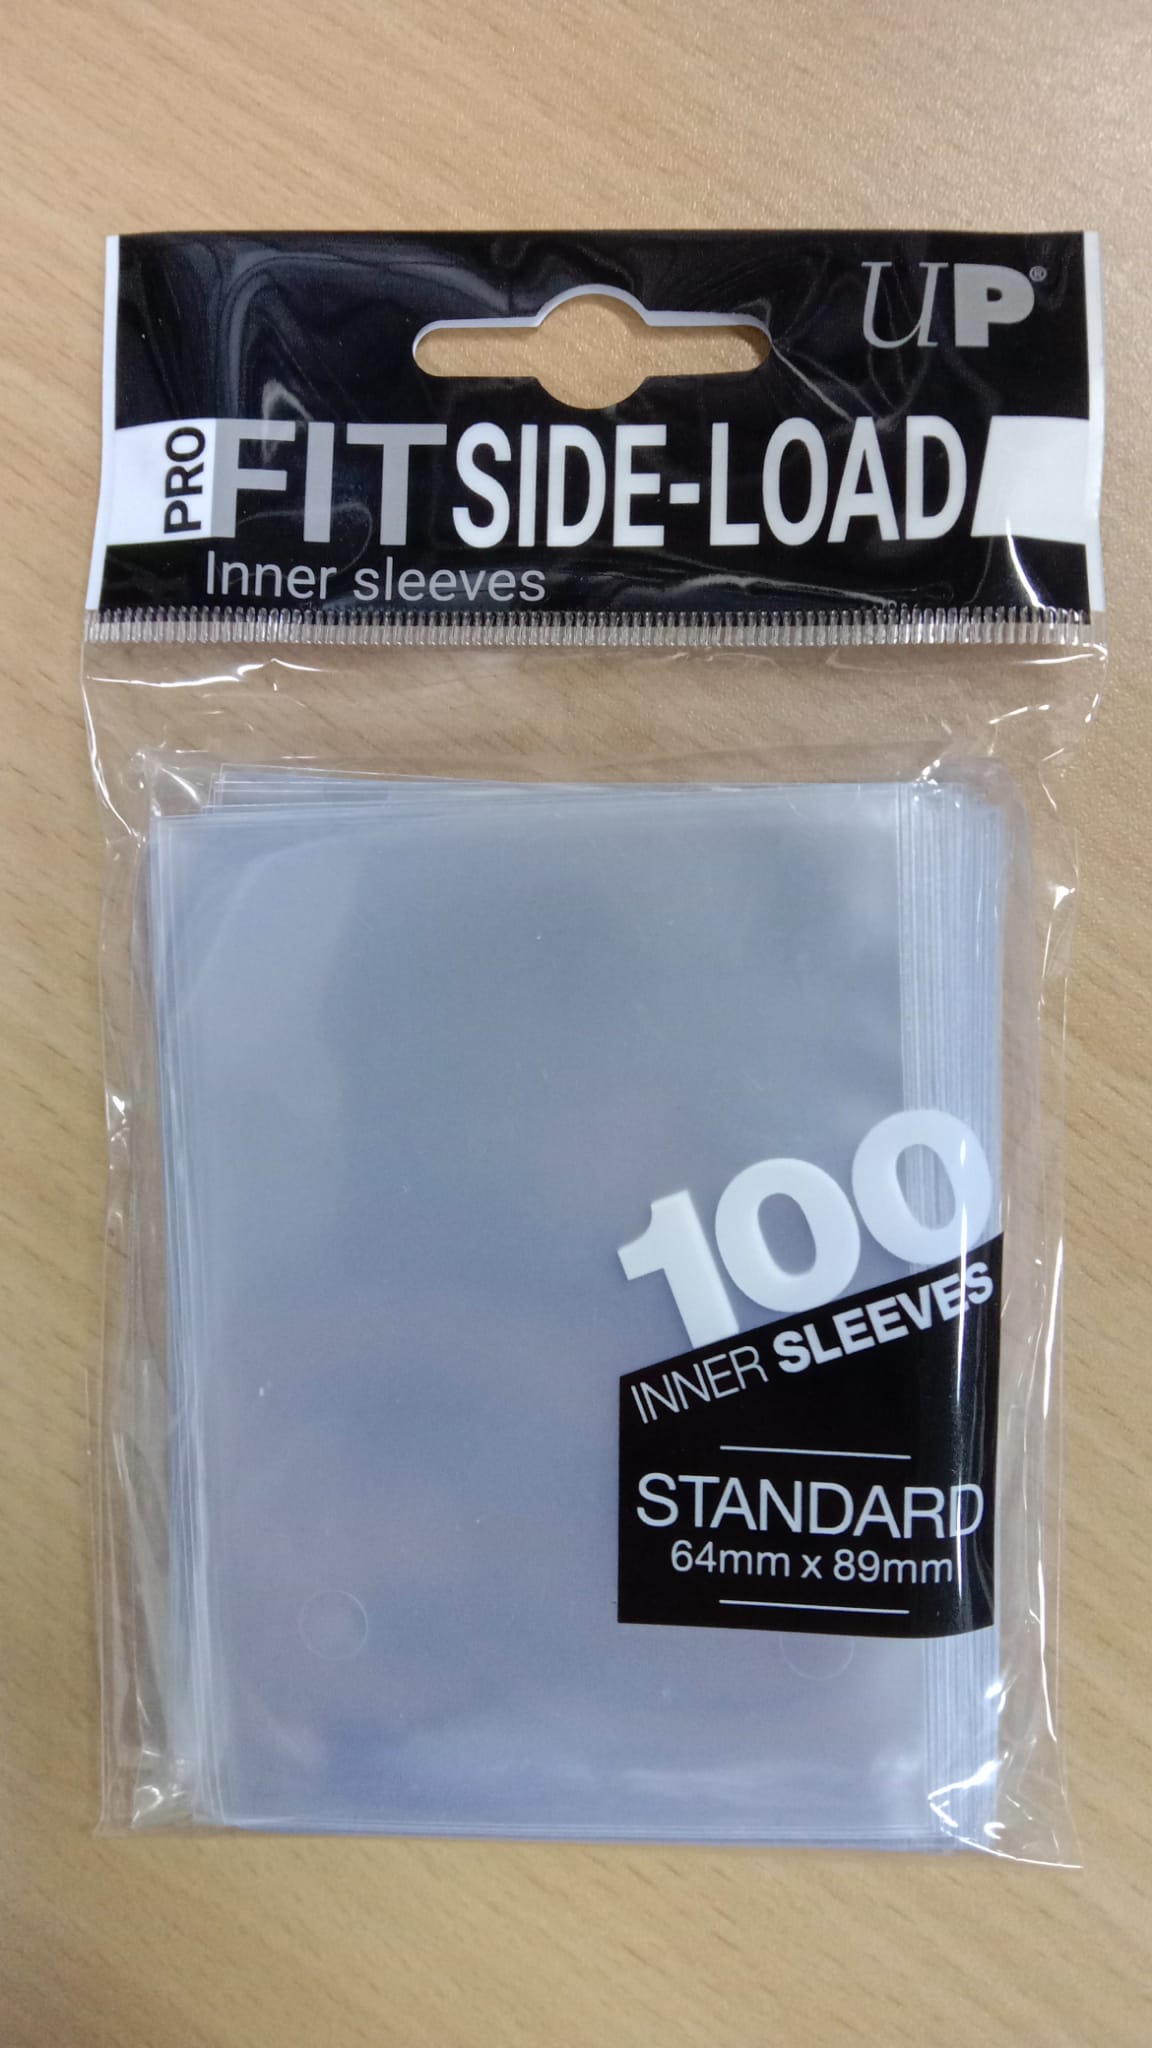 Ultra Pro Standard Sleeves (100) Clear